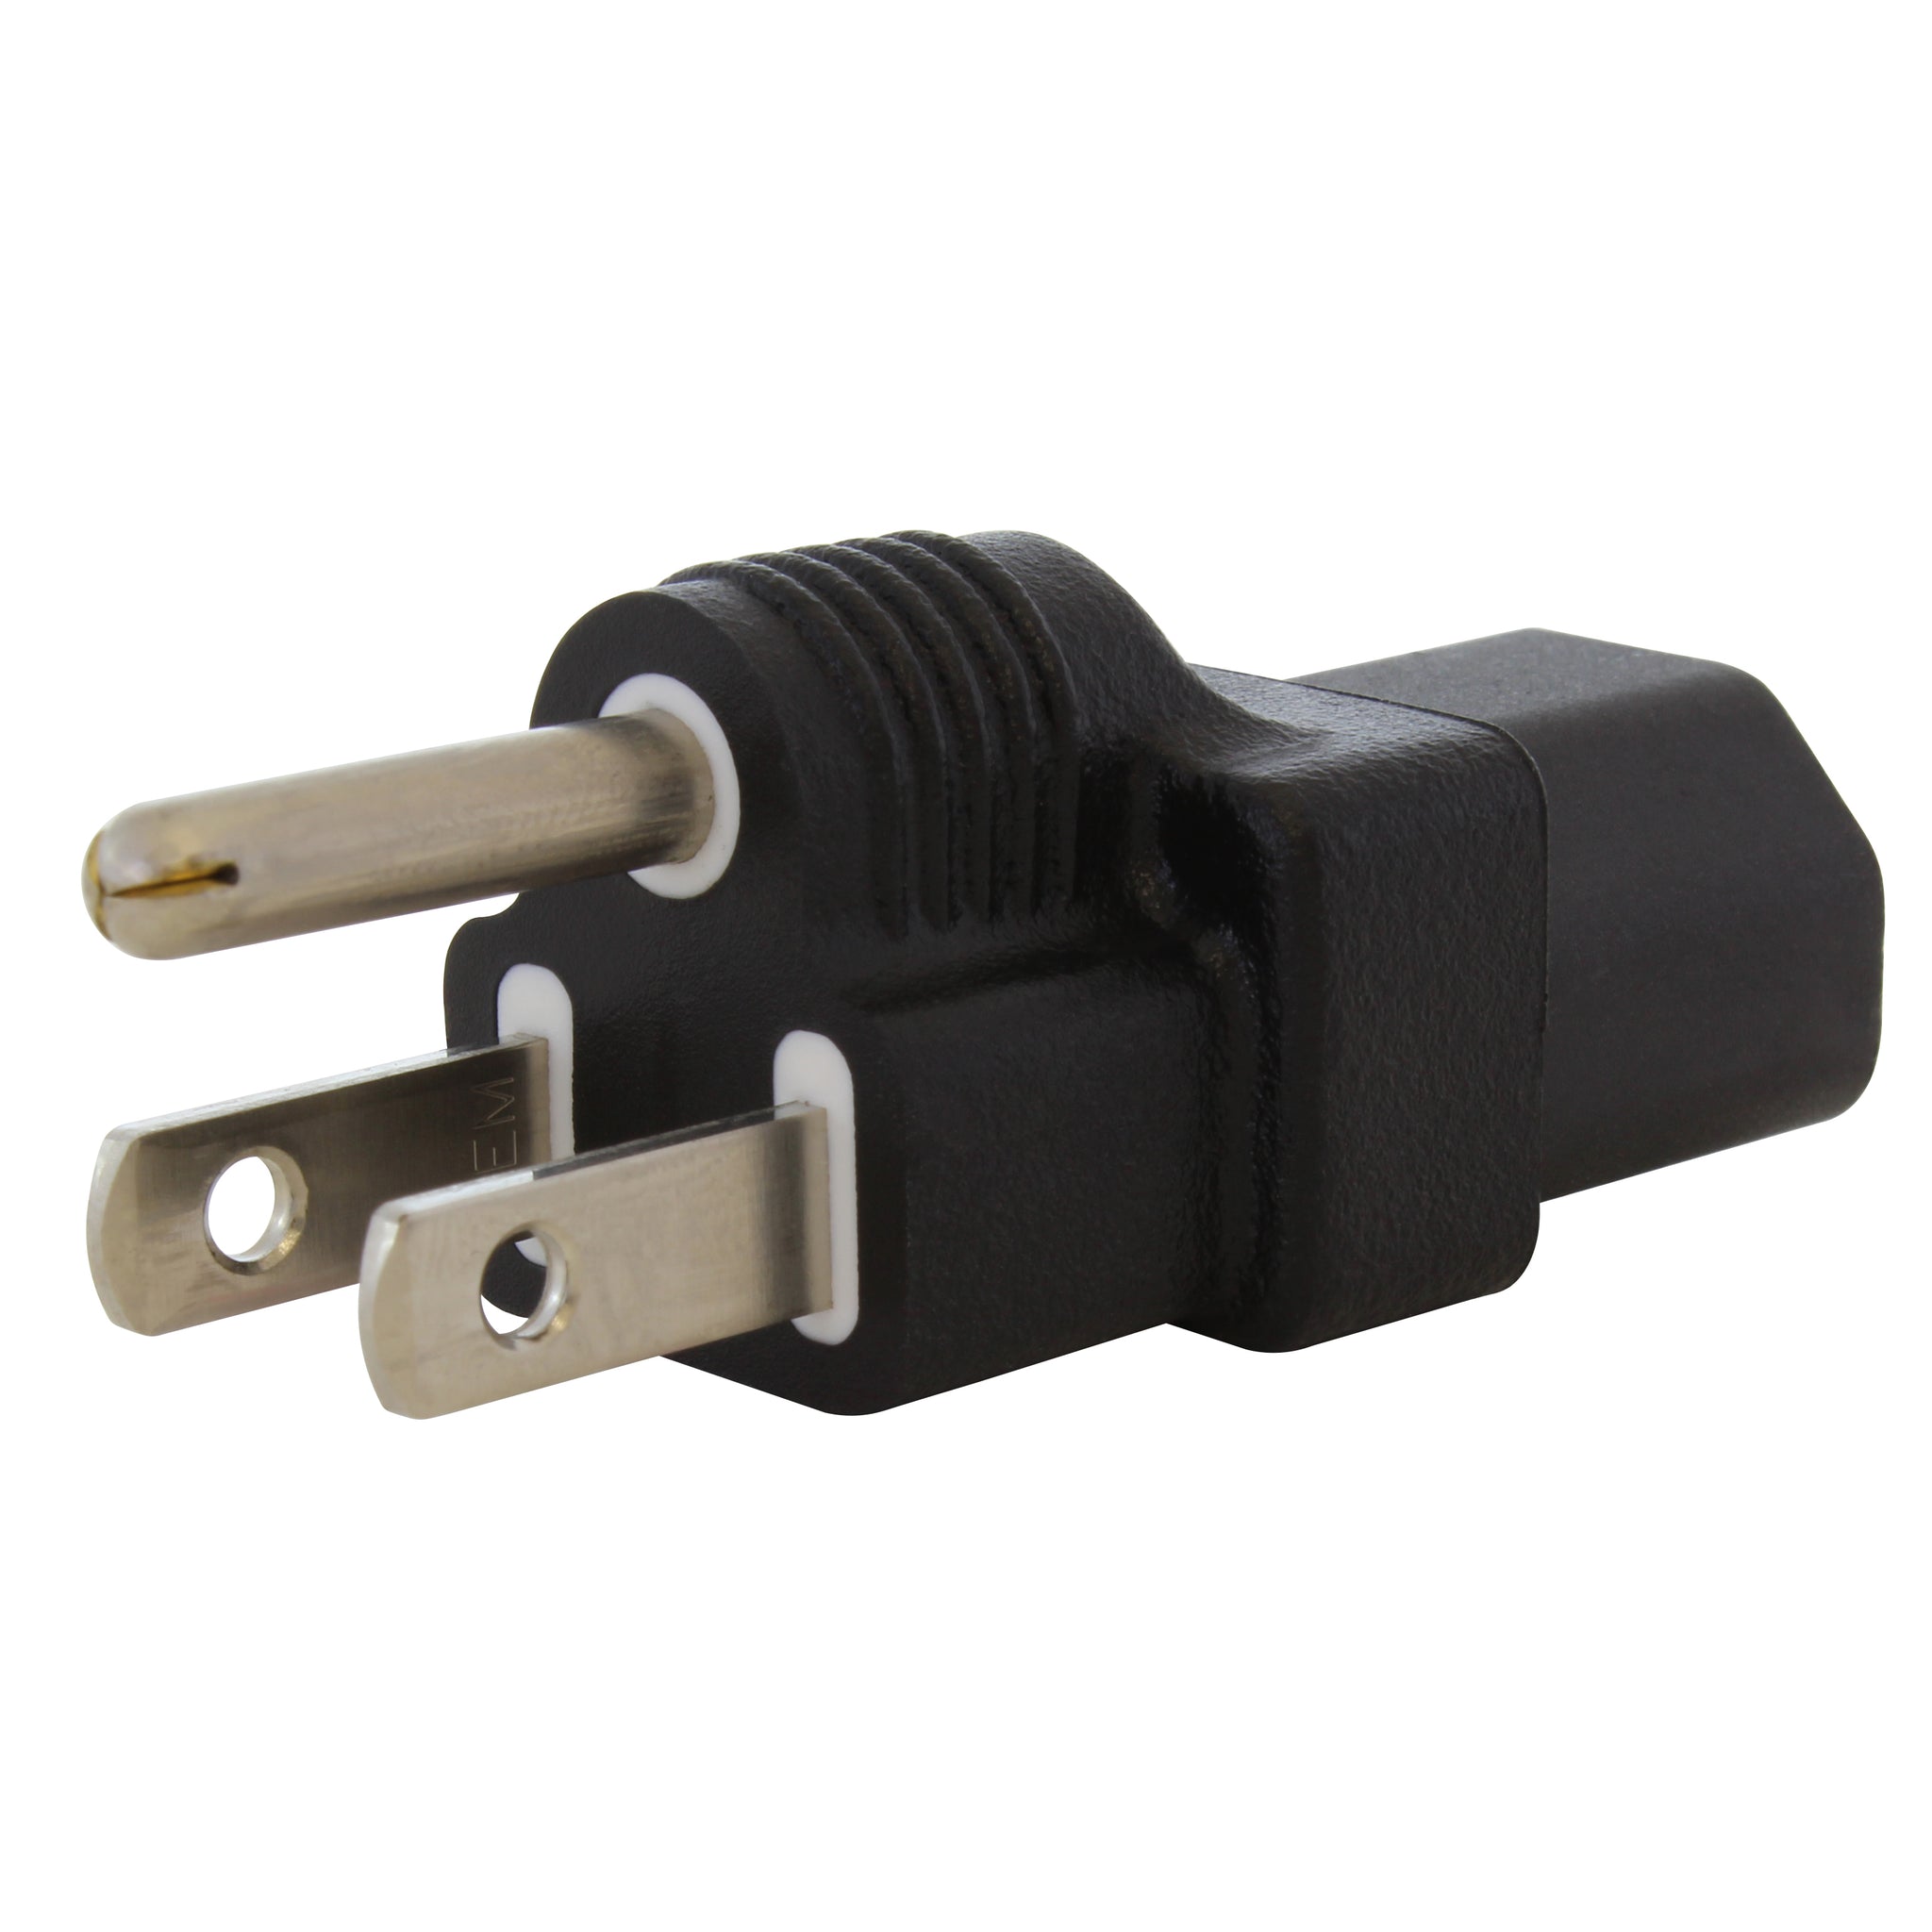 AC Works [ADUSC13] Type B NEMA 5-15P Household Plug to IEC C13 Connector